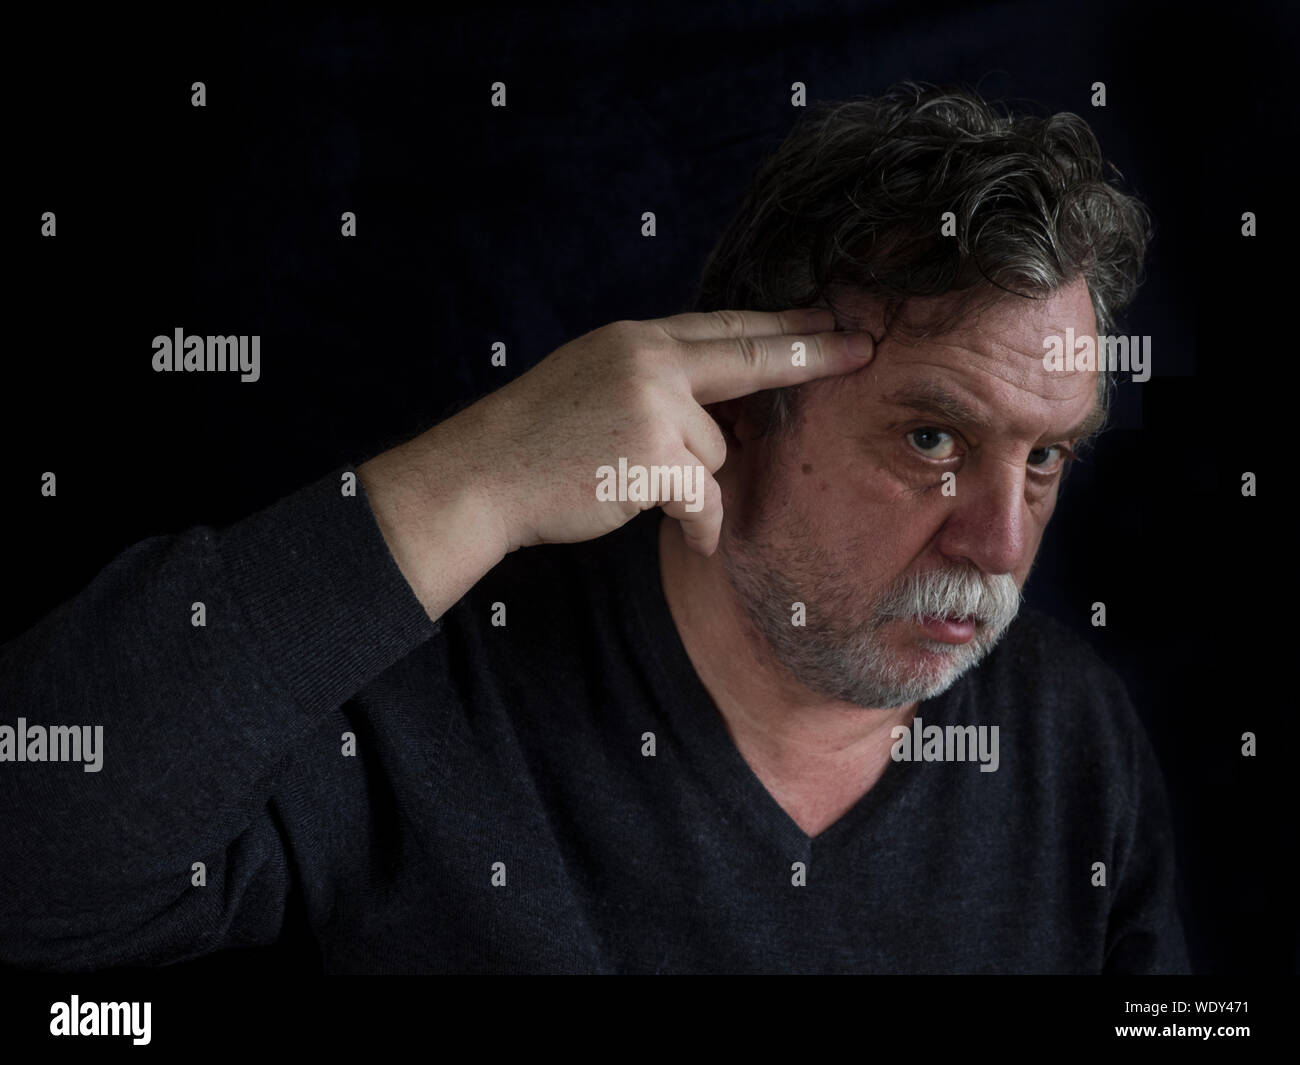 Portrait Of Mature Man Shooting Himself Against Black Background Stock Photo